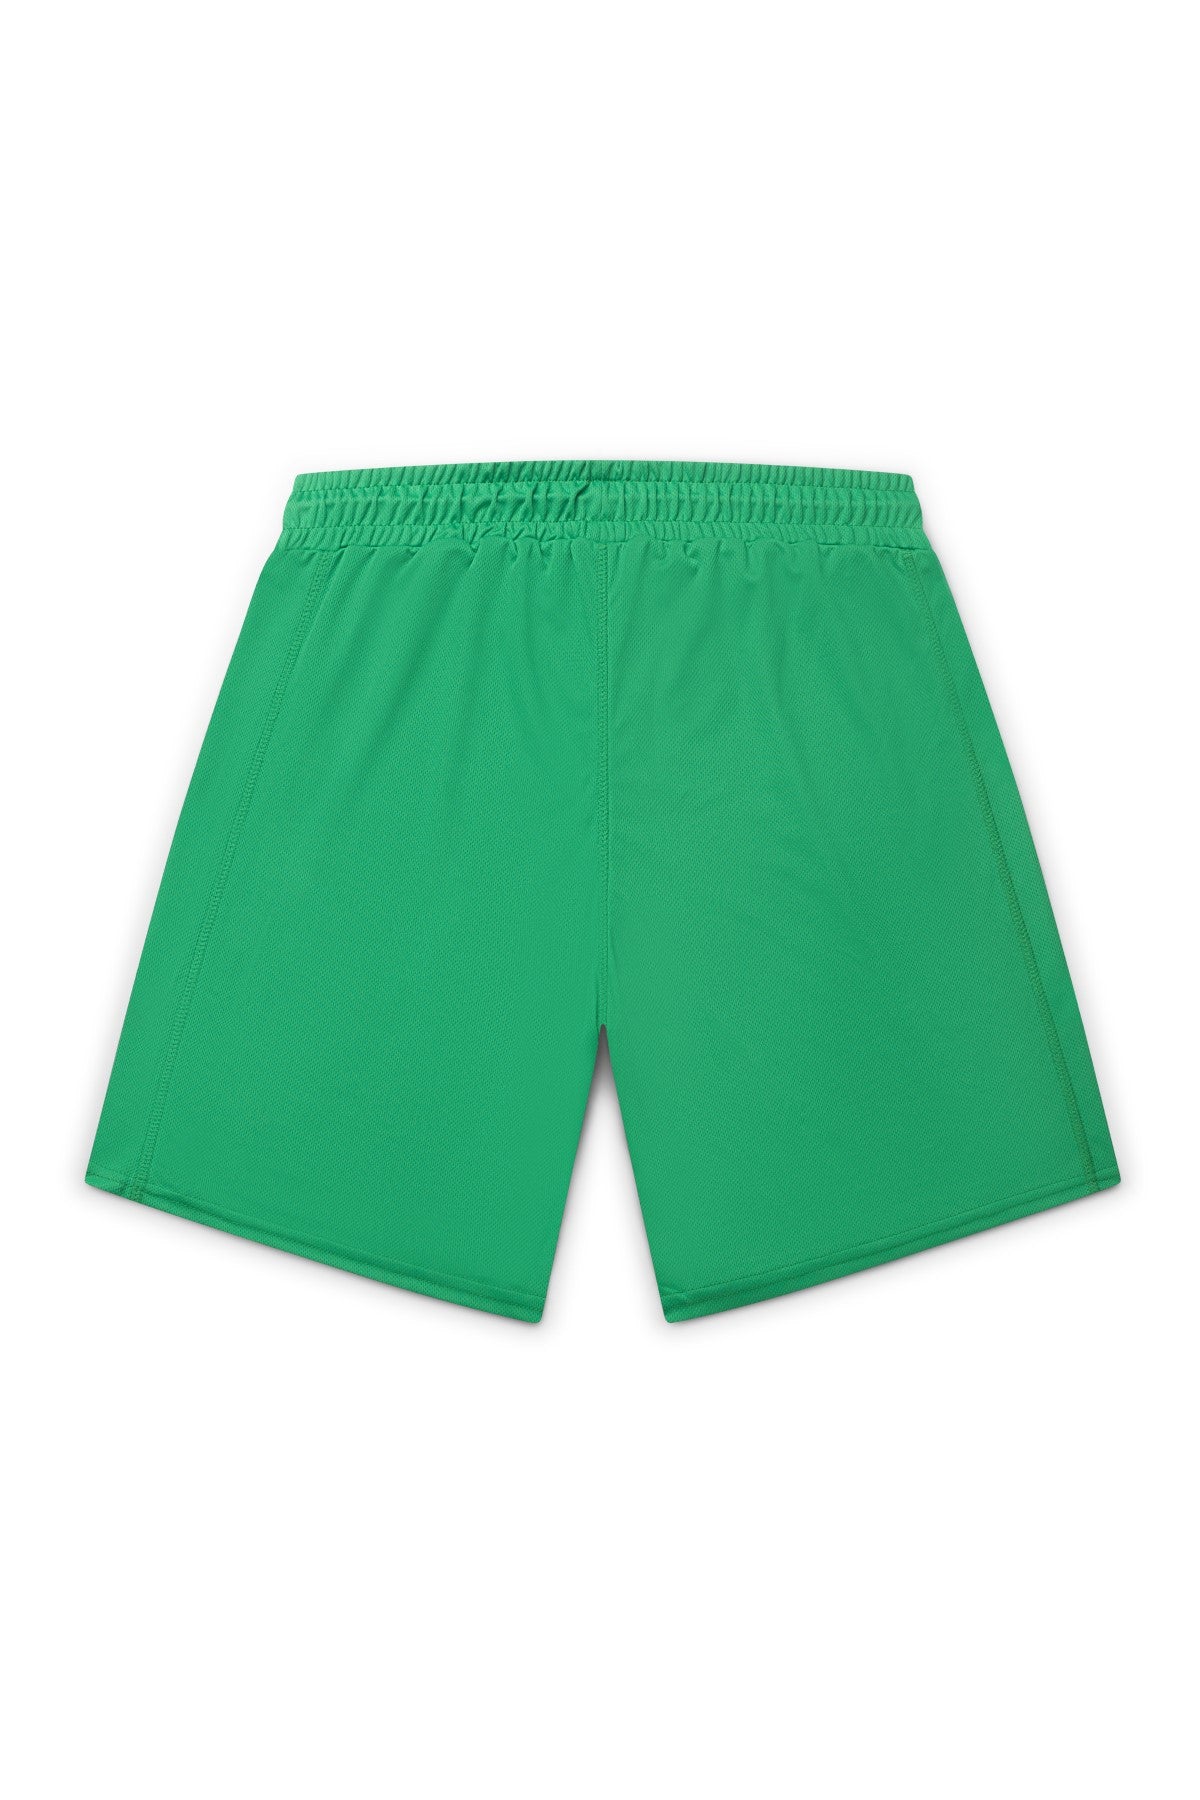 PLAYERSHOME x TRUST Shorts - Green